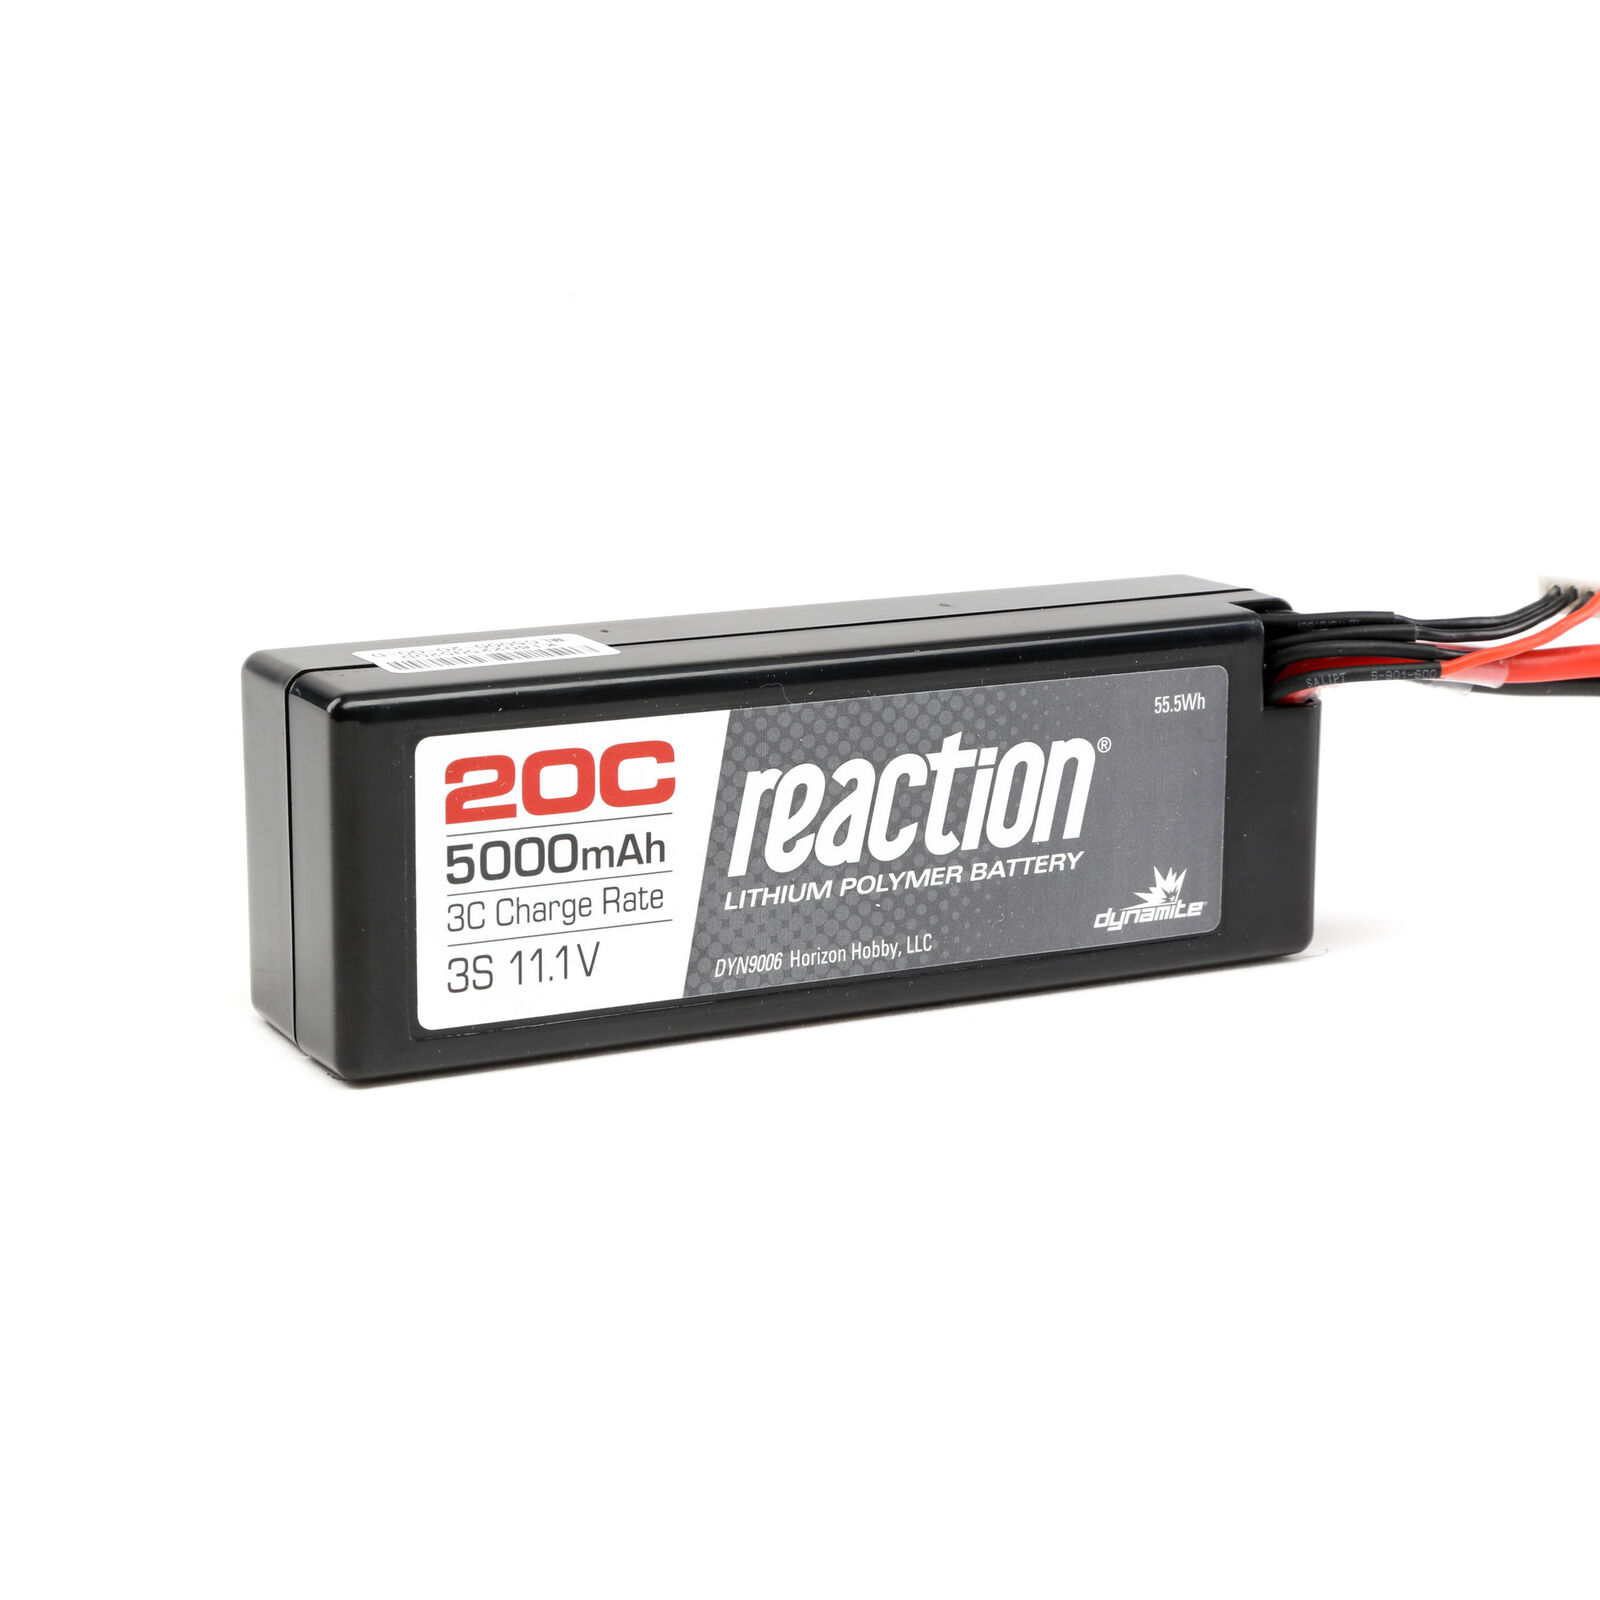 11.1V 5000mAh 3S 20C Reaction Hardcase LiPo Battery: EC3